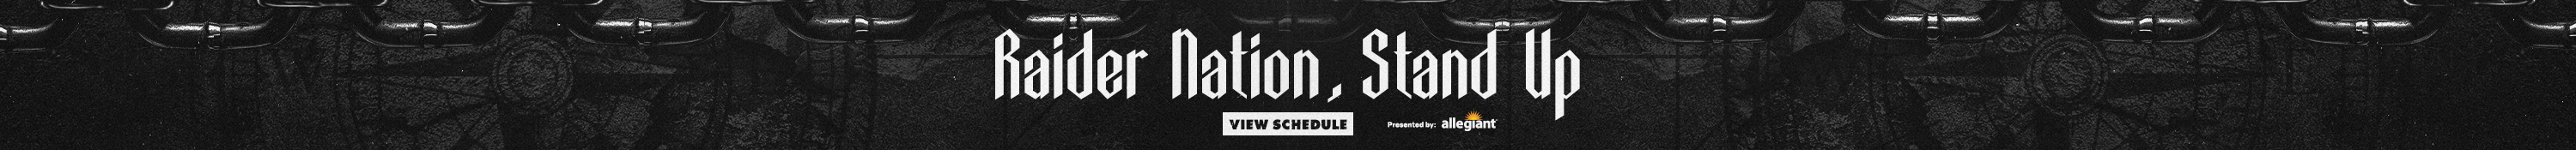 Raider Nation, Stand Up - View Schedule - Presented by Allegiant